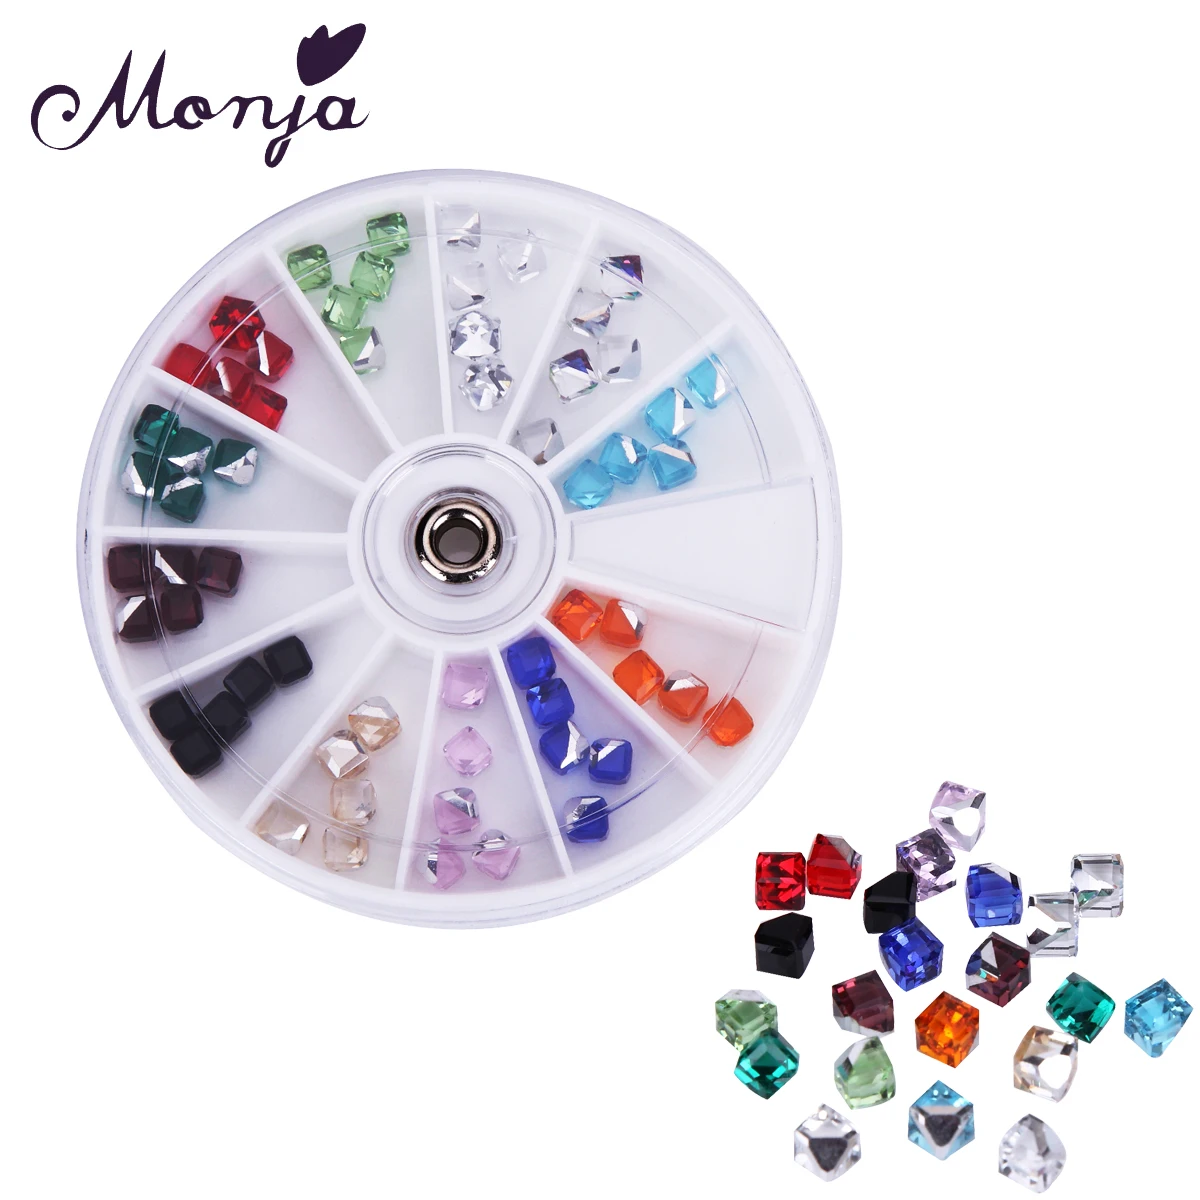 12 Color/Wheel Riamond Nail Art Rhinestone Beads Set Gel Polish Tips Phone 3D Phone DIY Decor Accessories Colorful Jewelry Kits